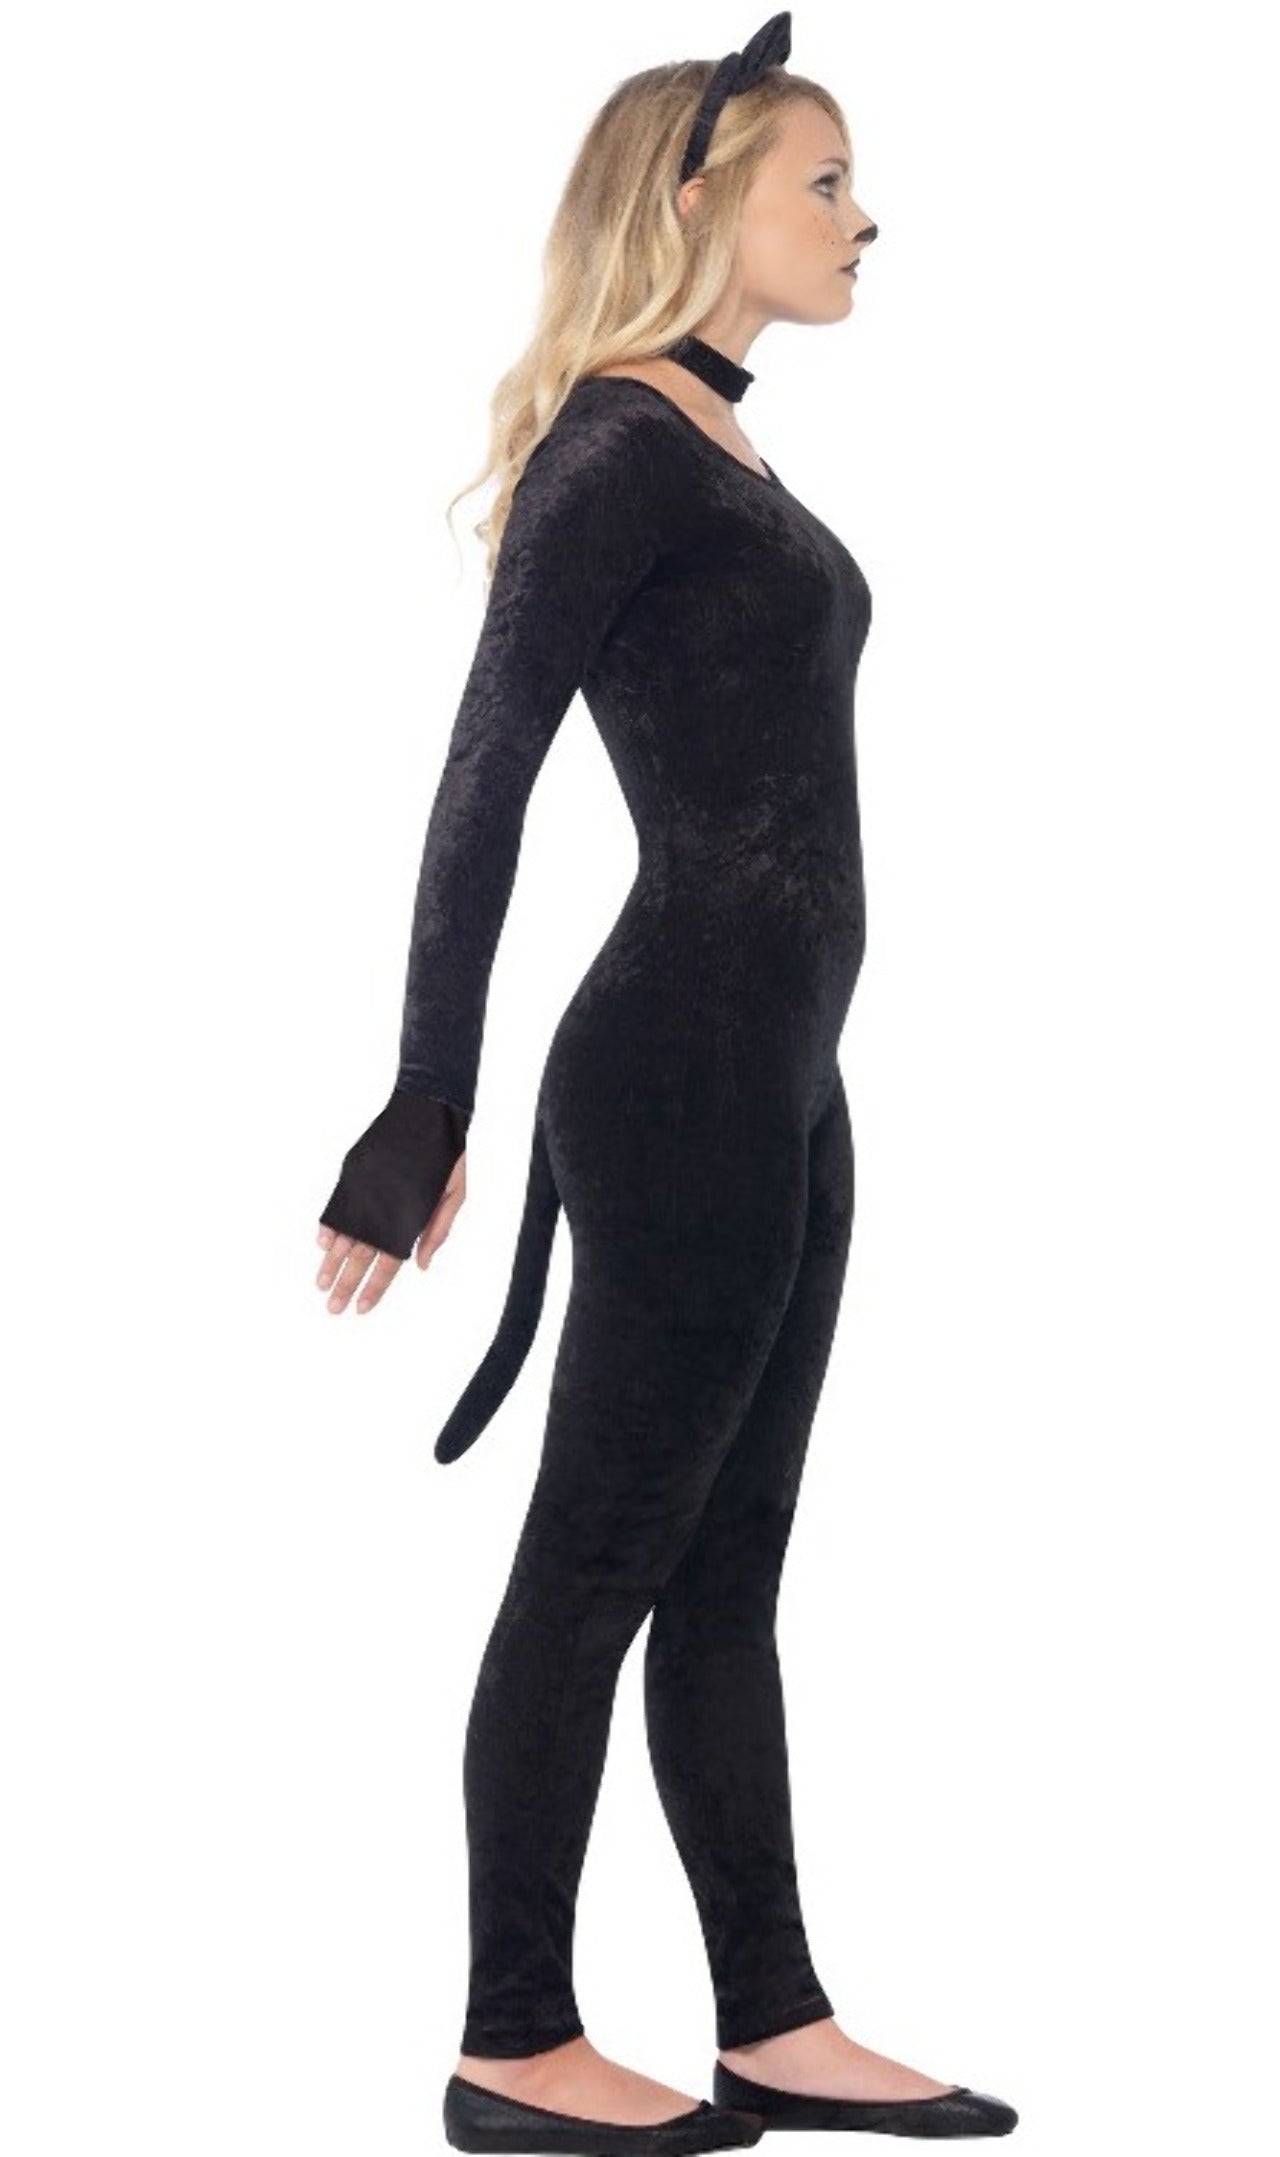 Comprar online Disfraz de Gata Negra para mujer